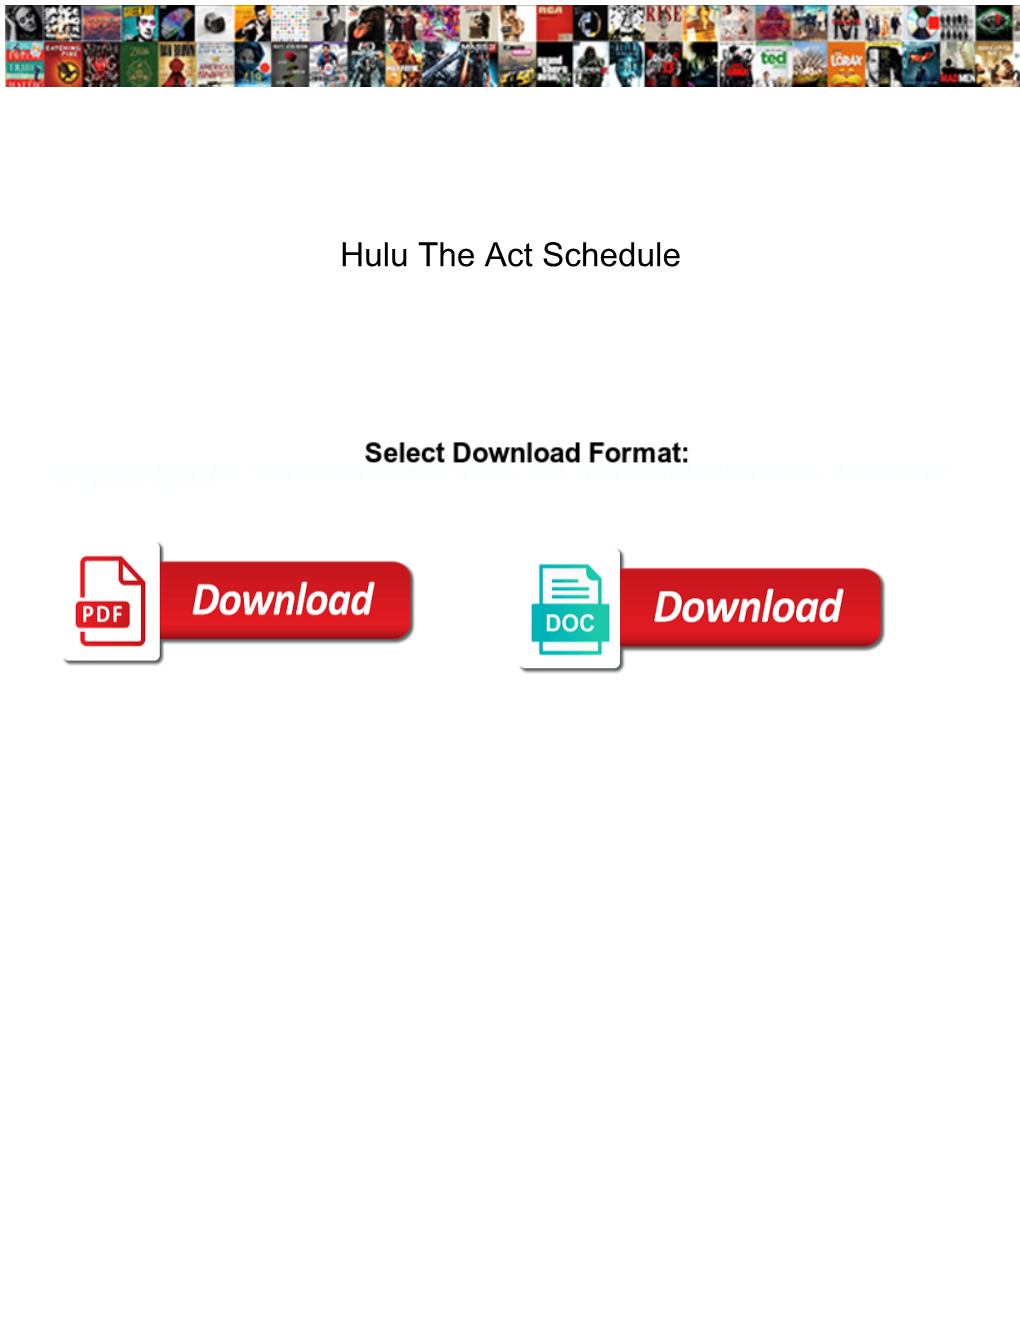 Hulu the Act Schedule